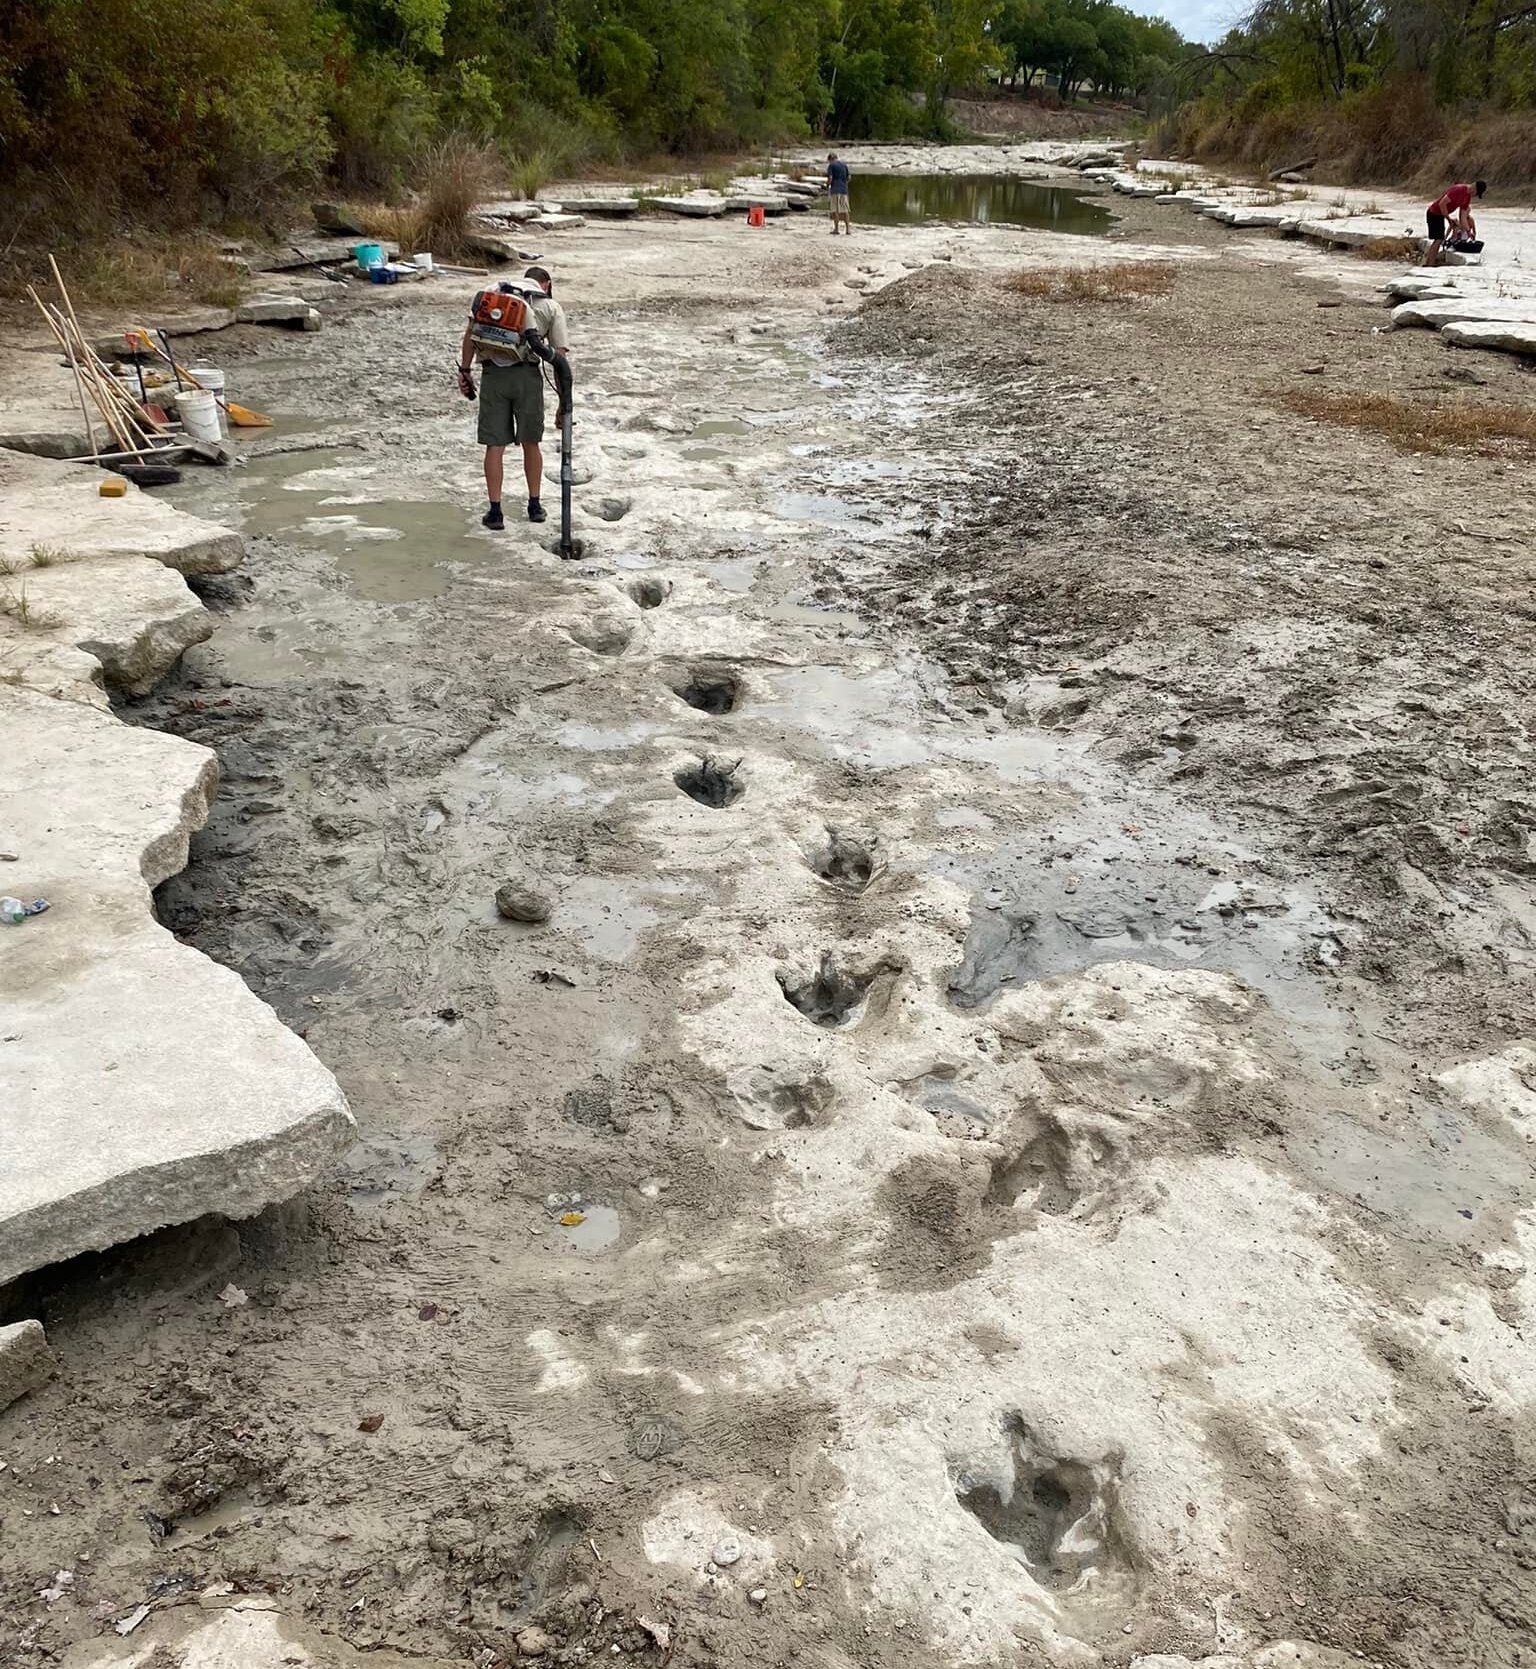 dinosaur tracks found in texas amid droughts 